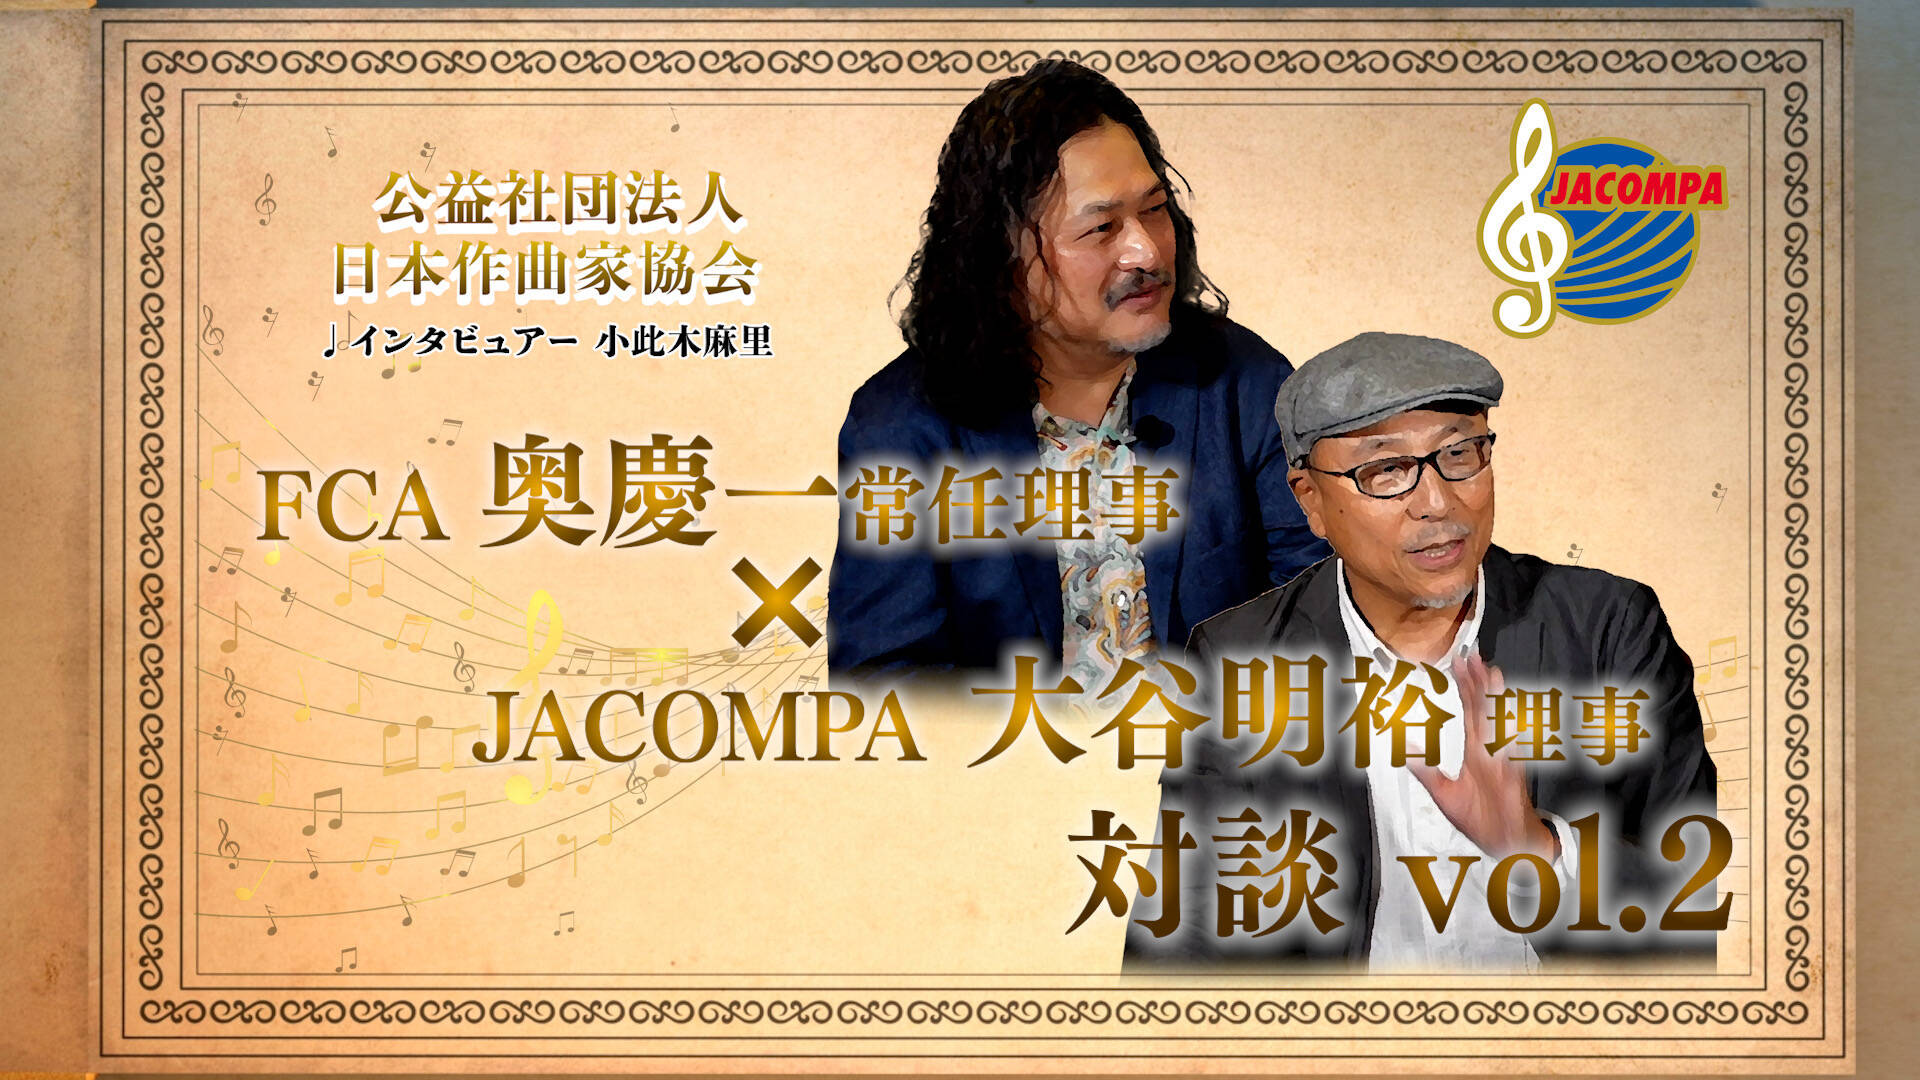 FCA(奥慶一 常任理事) × JACOMPA(大谷明裕 理事) 対談 Vol.2【音楽つづれ織り】